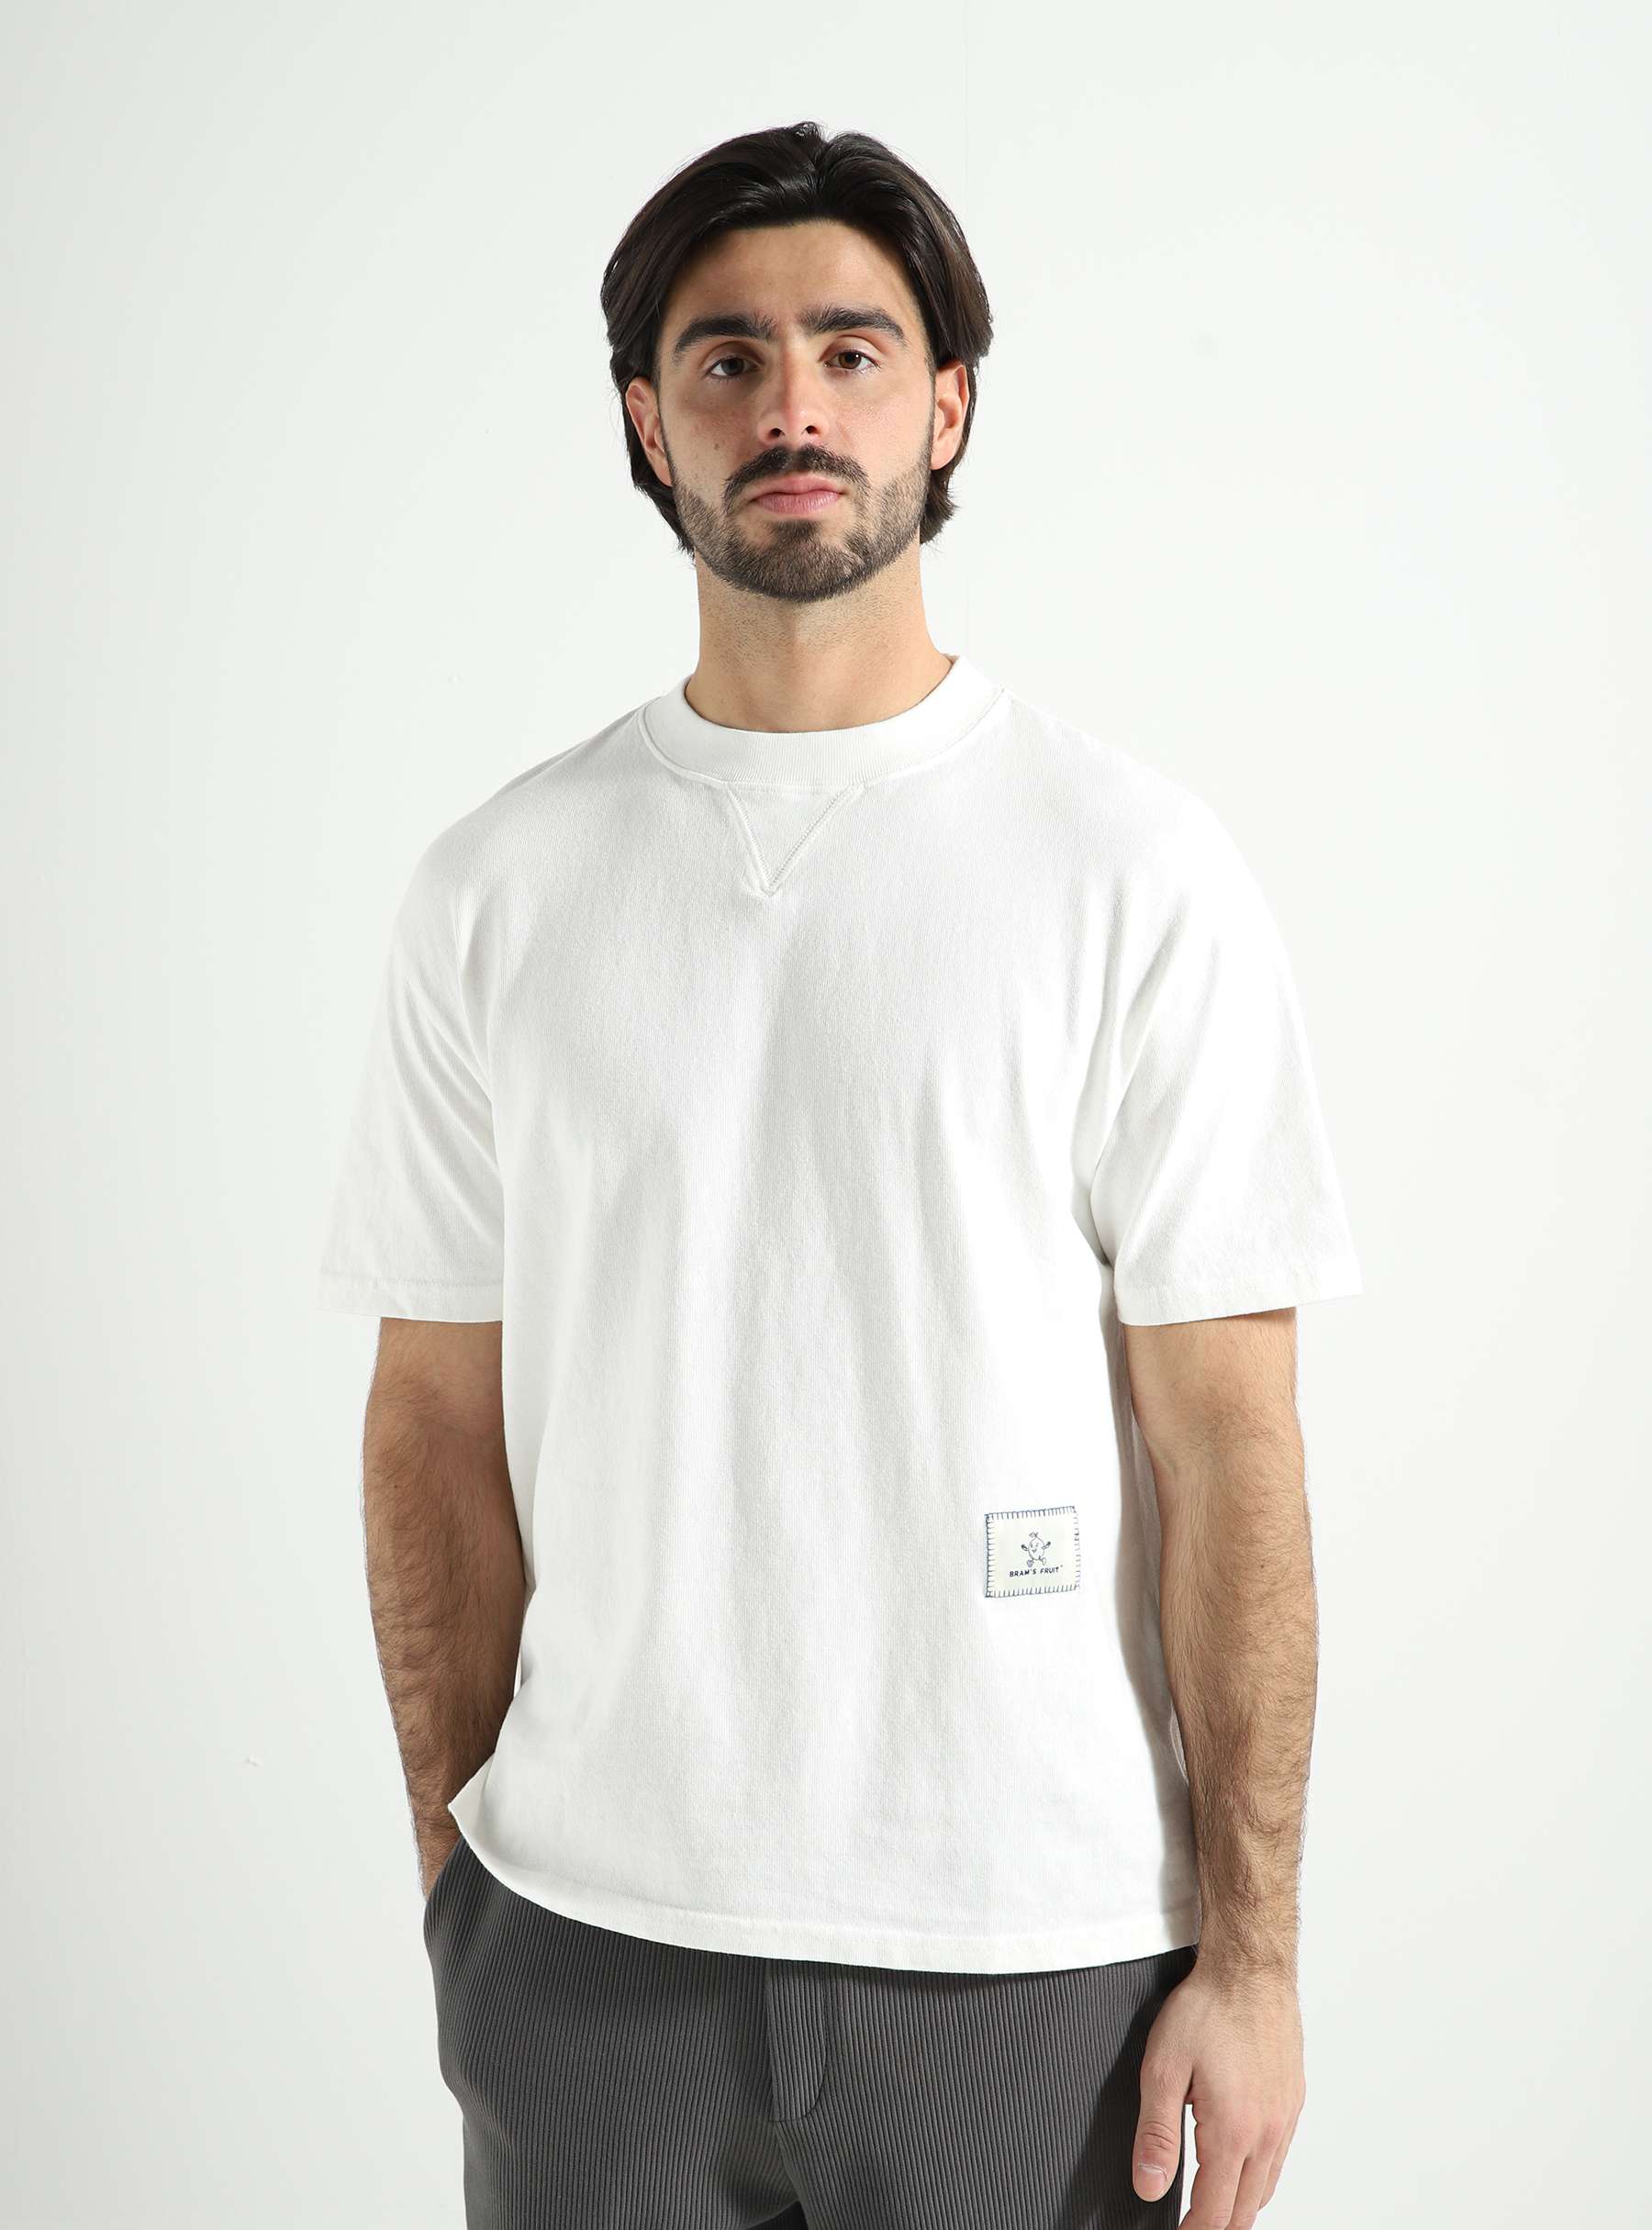 Atelier T-shirt White 161